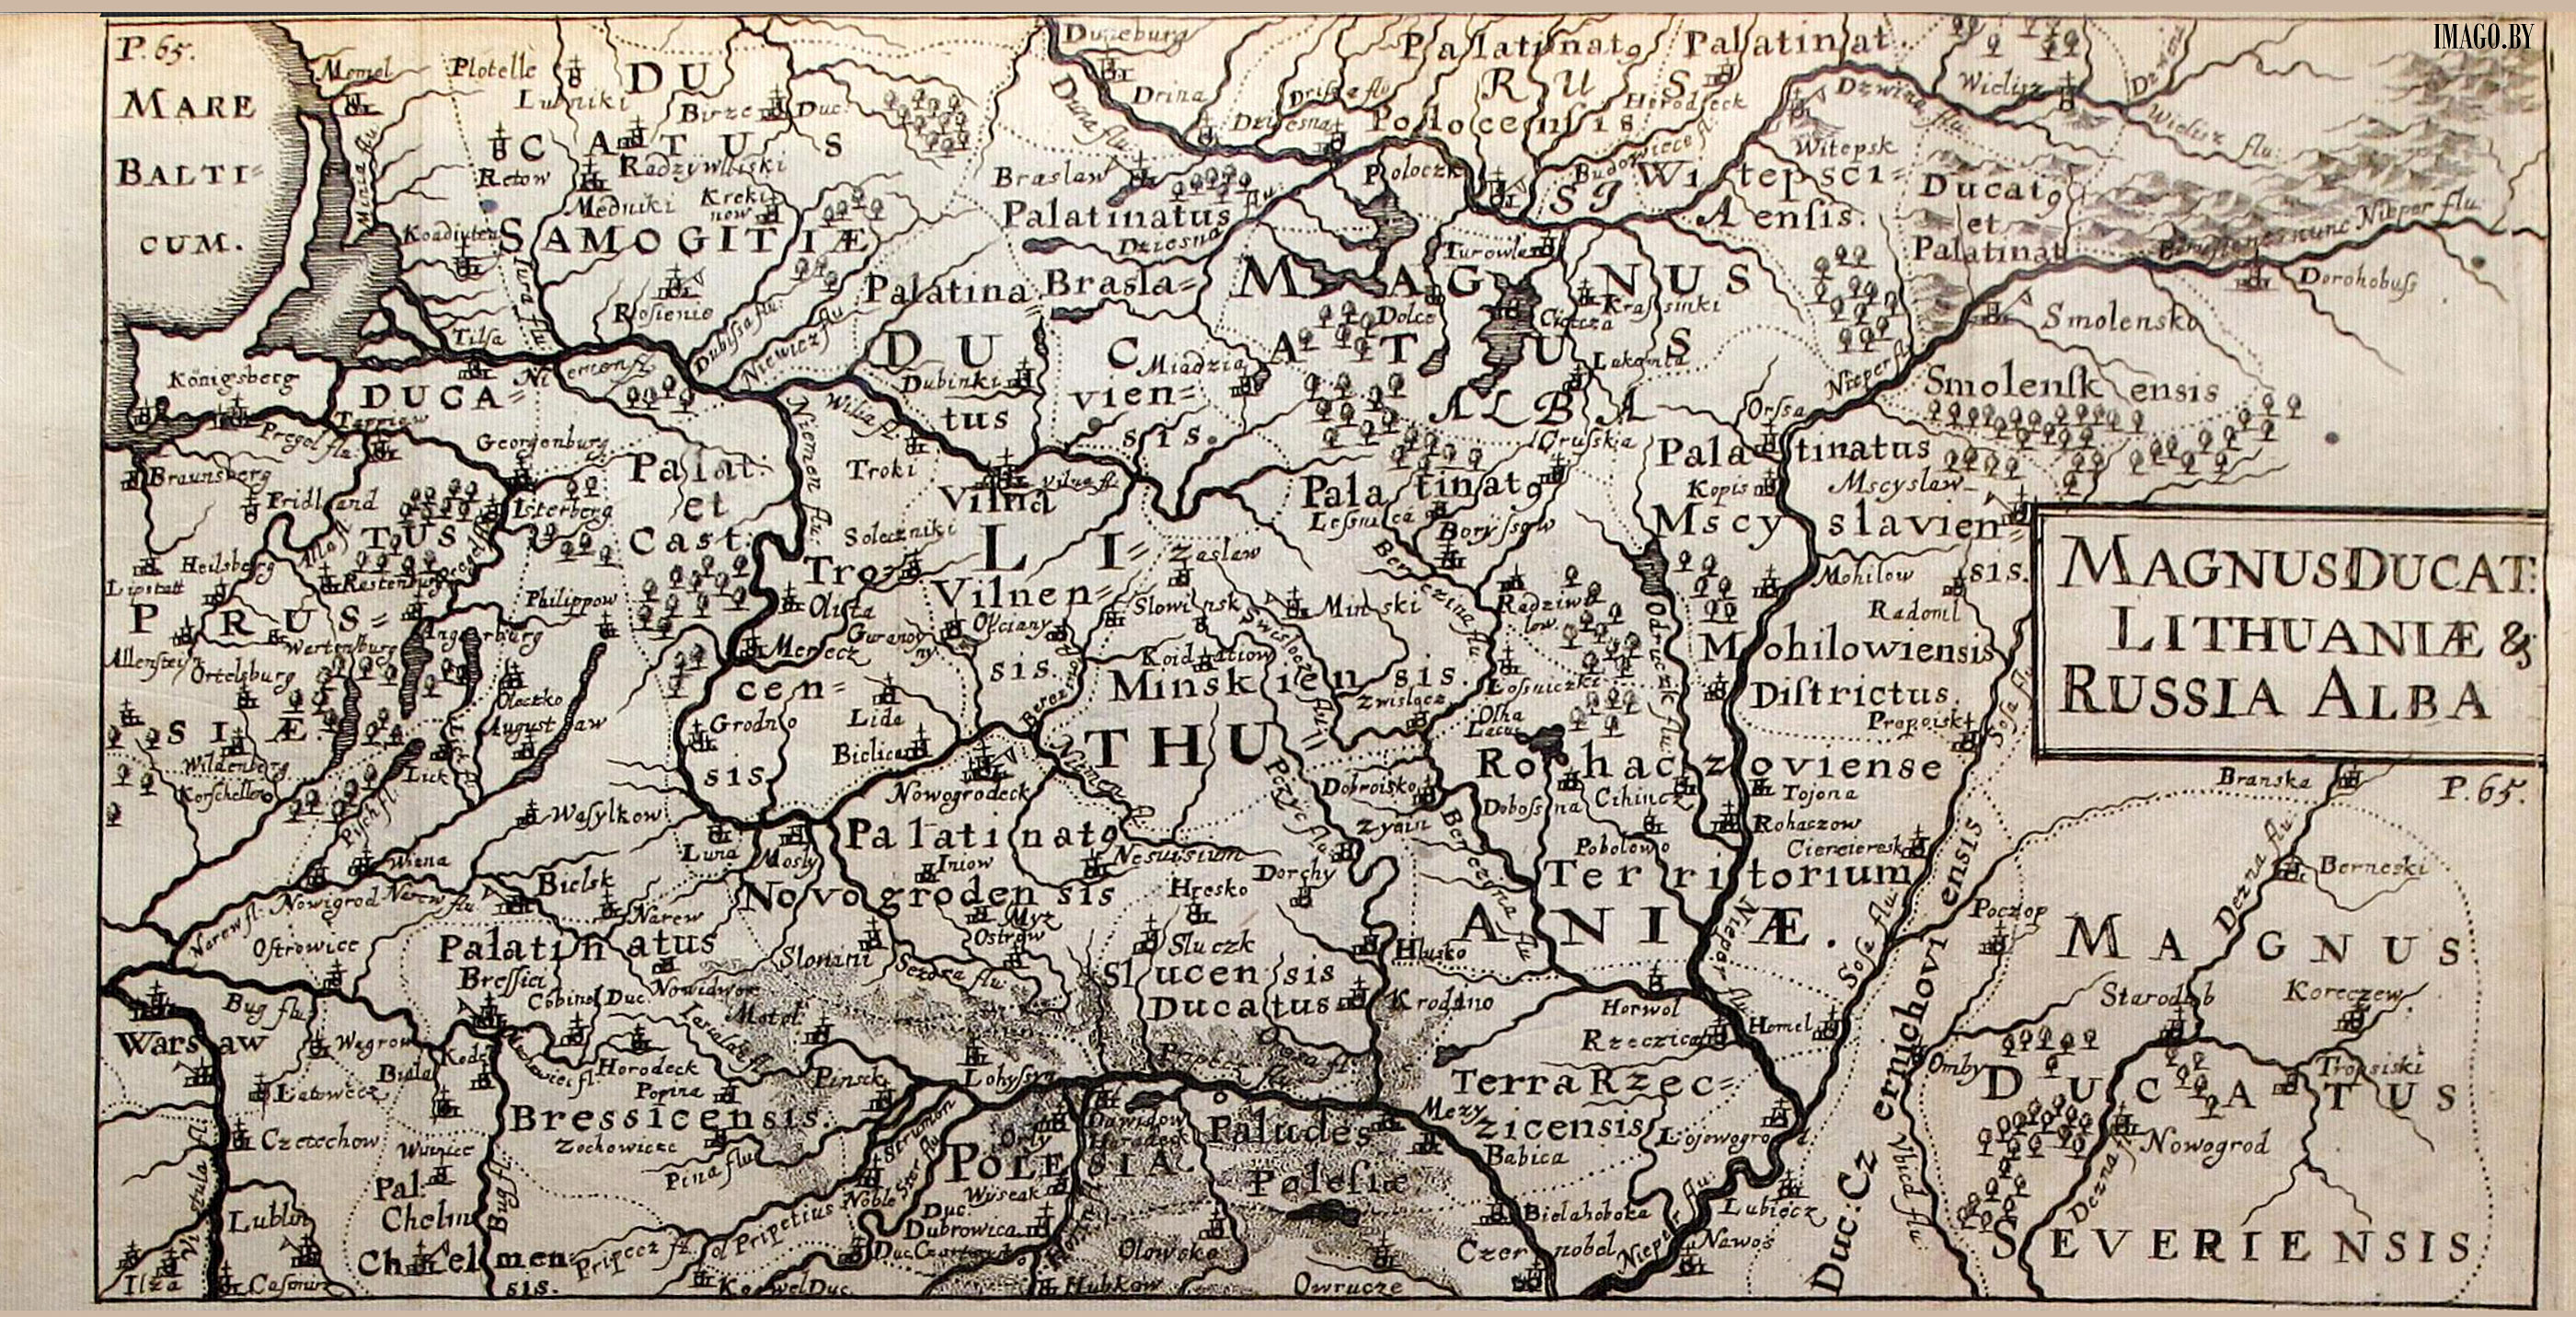 Jacob von Sandrart, MAGNUS DUCATE: LITHUANIAE & RUSSIA ALBA, 1687